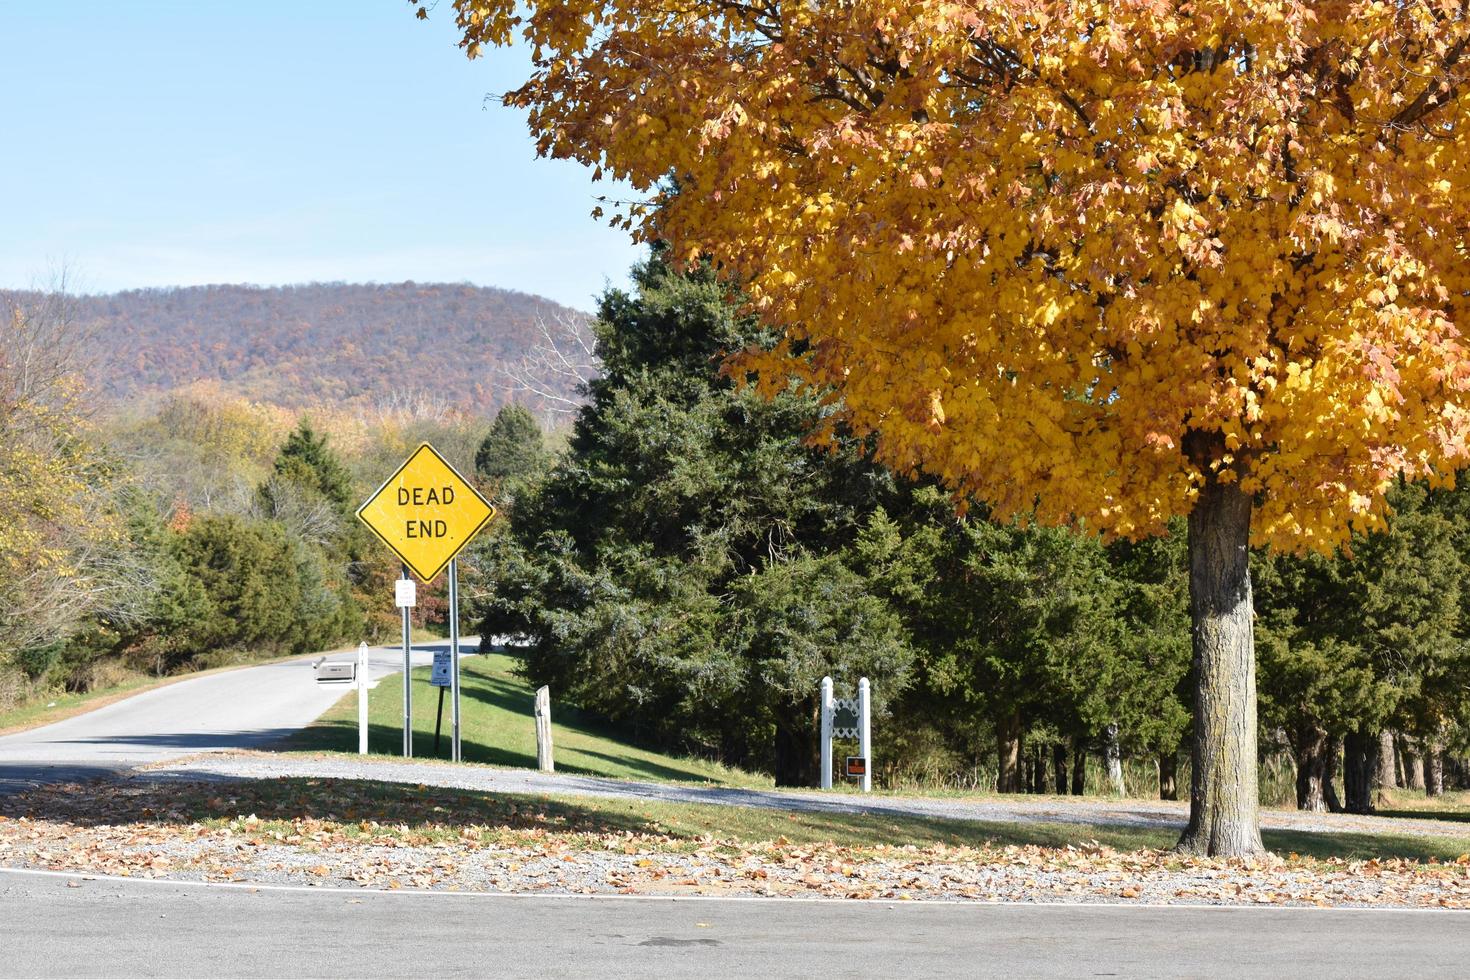 Dead end sign in an autumn landscape photo